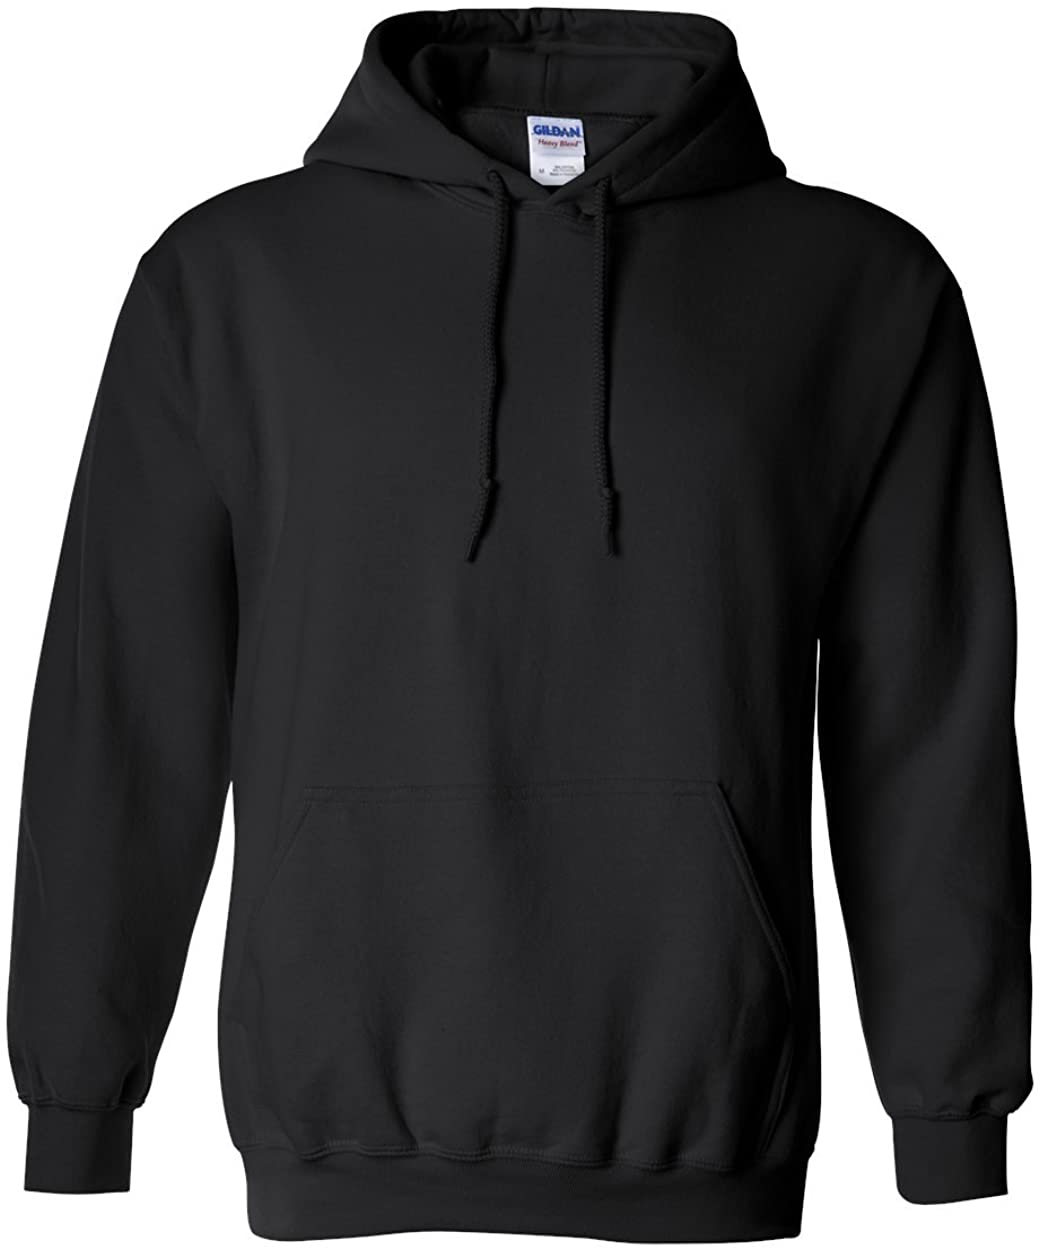 K&R Basic Hooded Sweatshirt G185